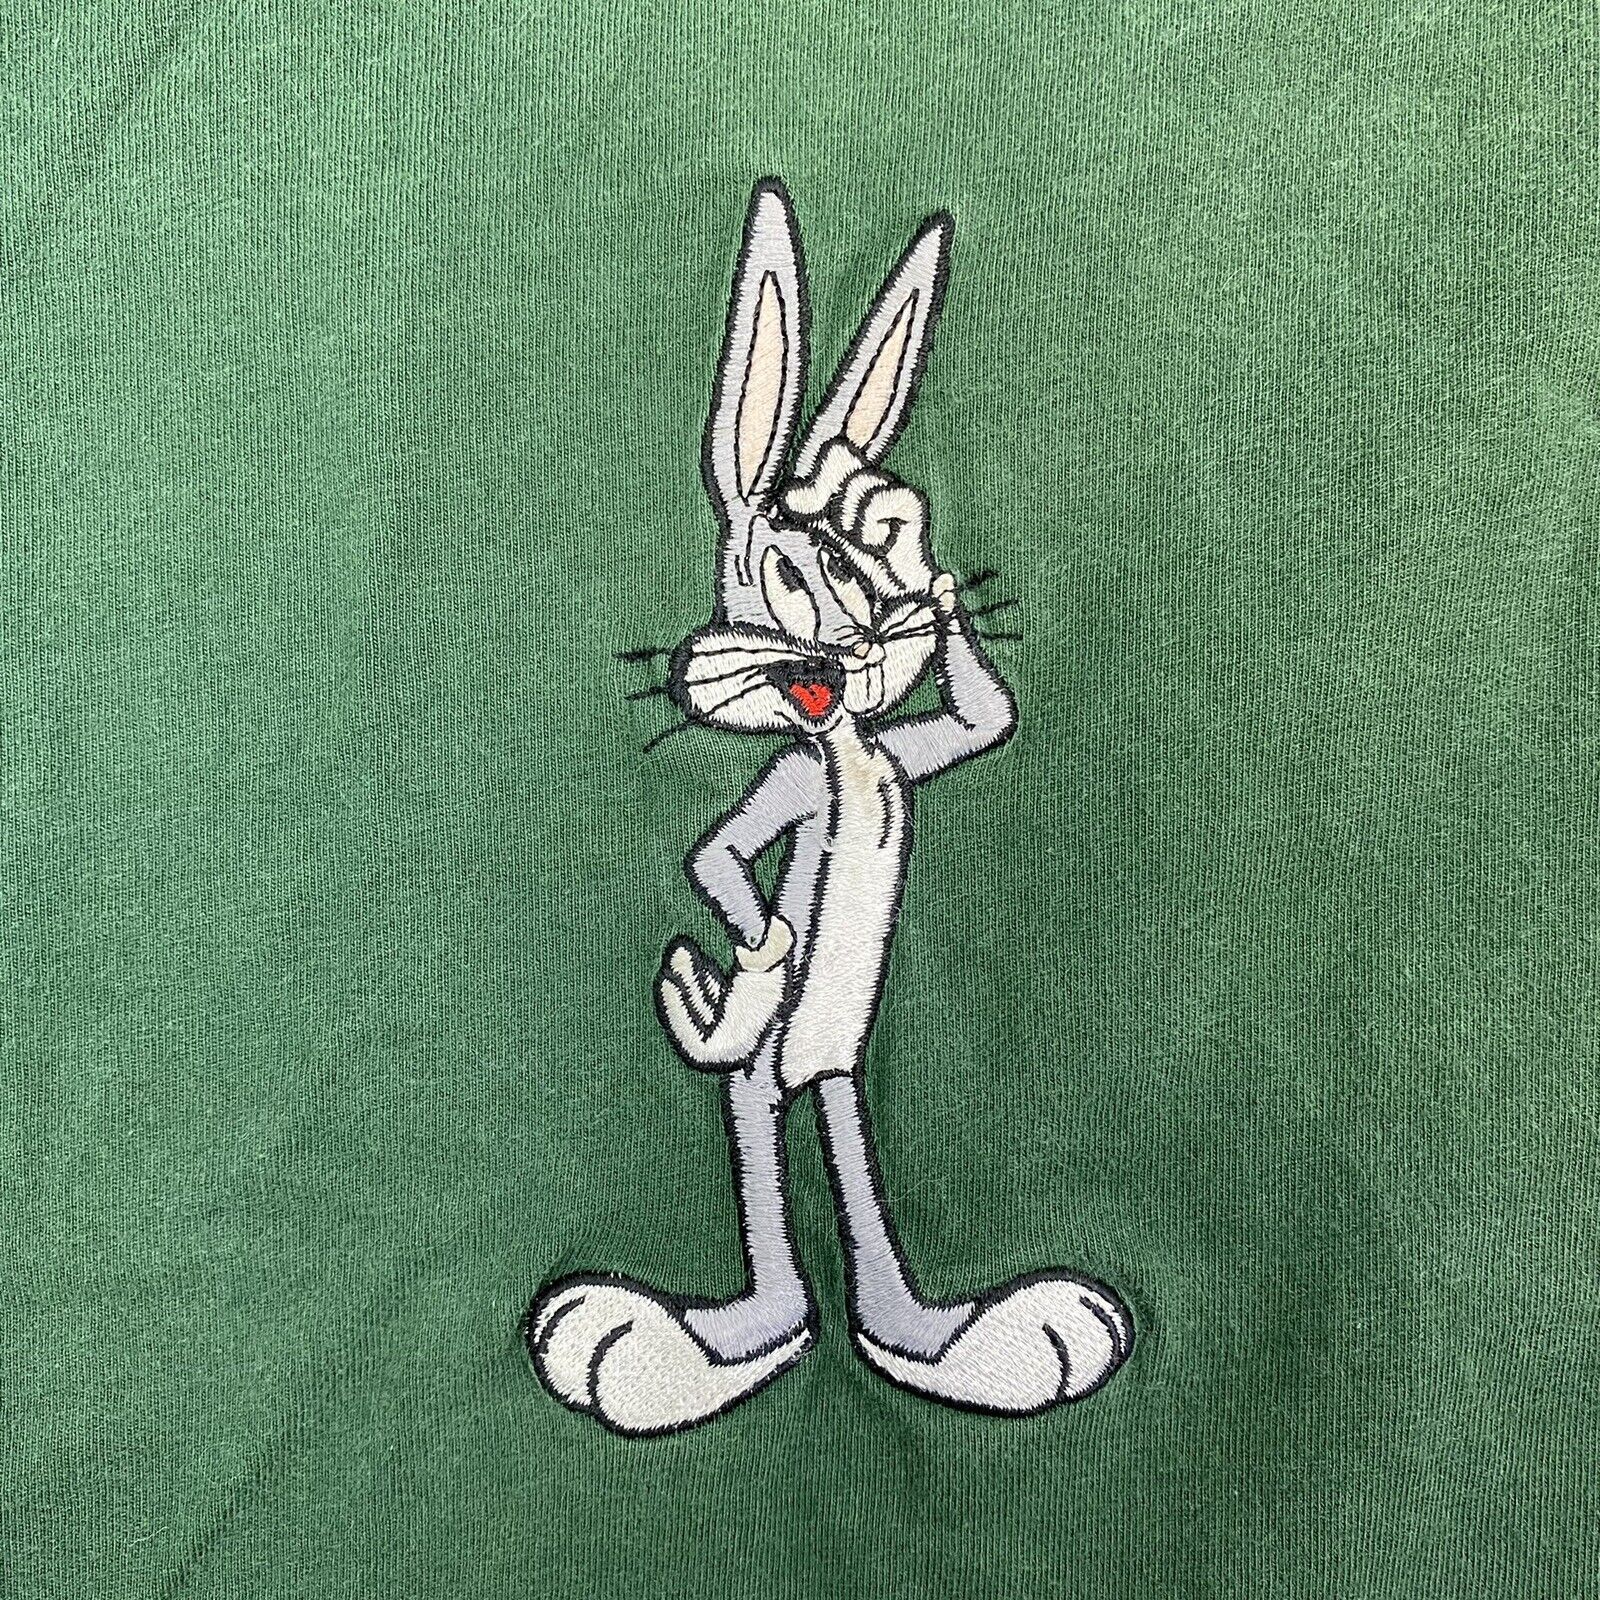 Bugs rabbit t shirt - Bugs Bunny